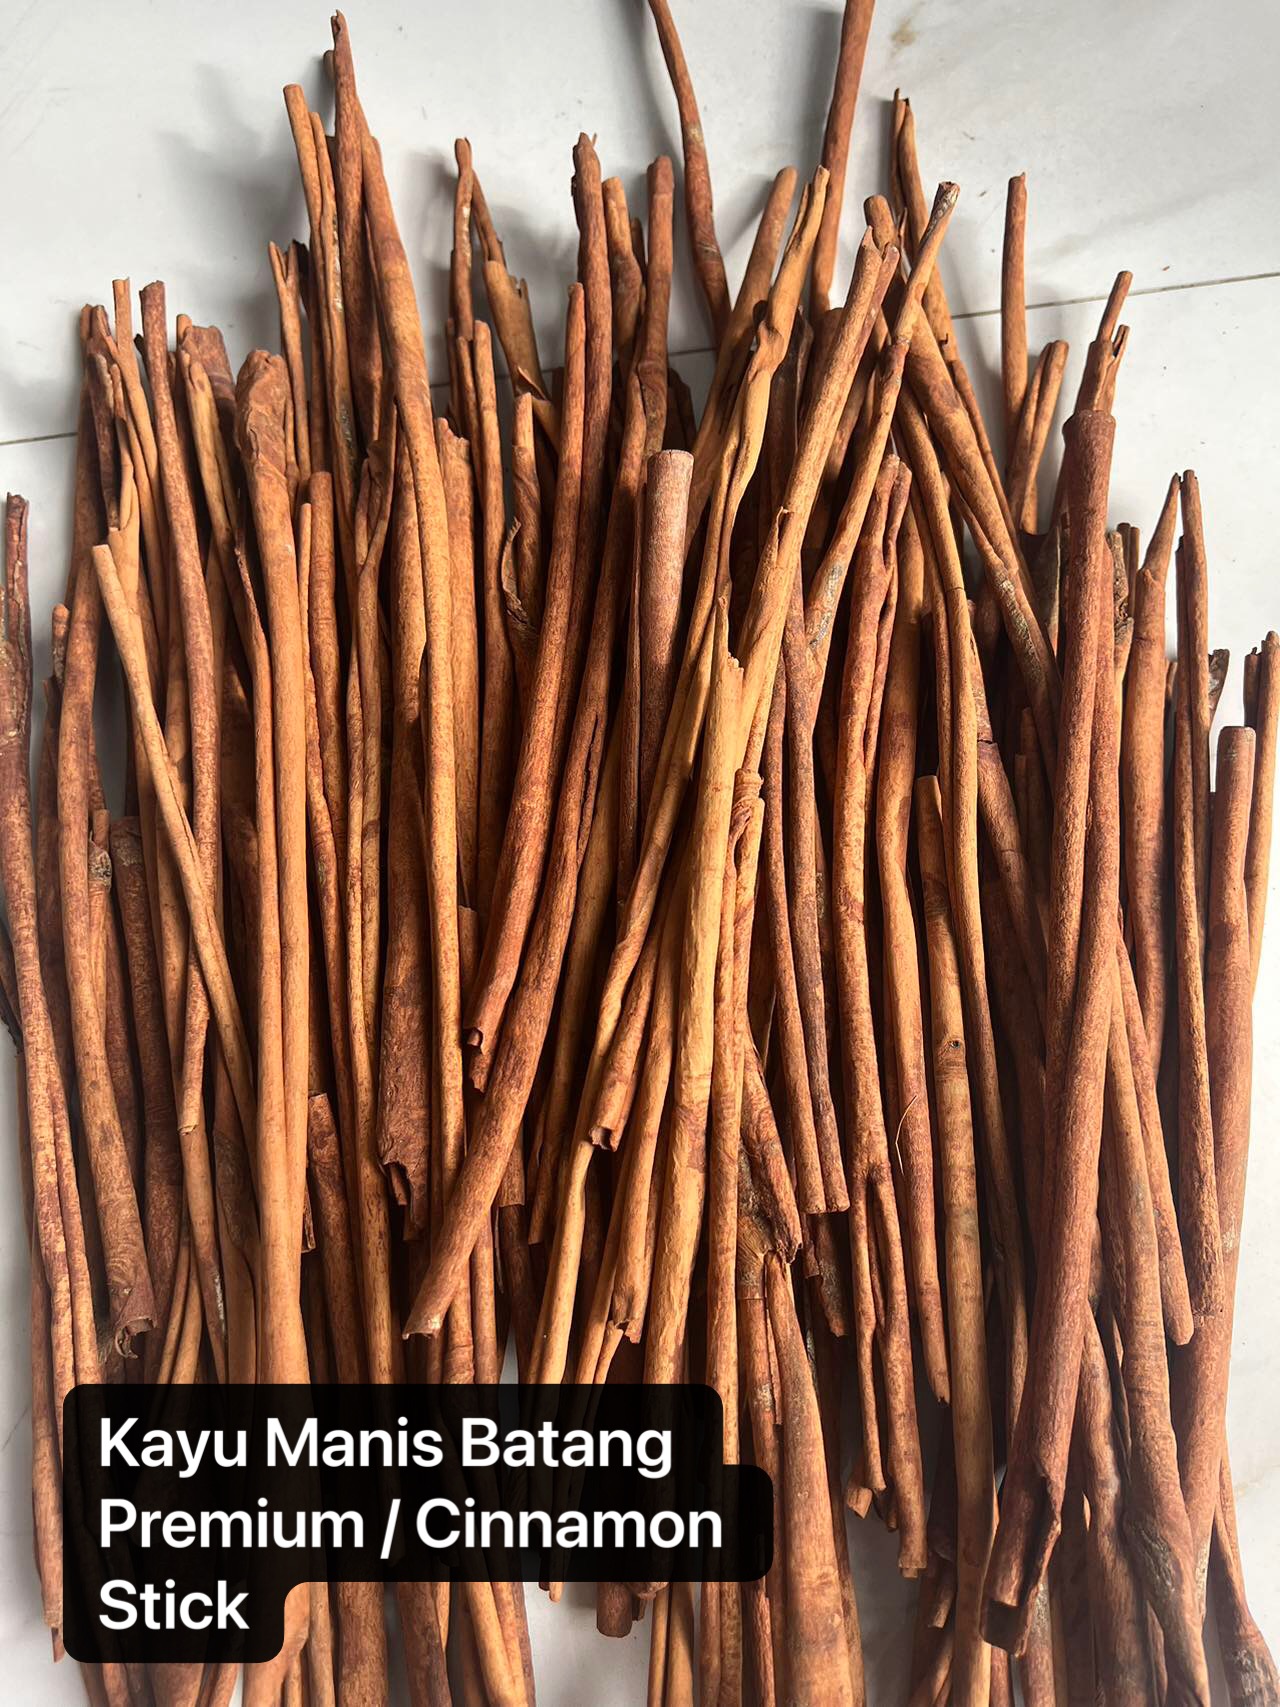 500gram Kayu Manis Batang / Cinnamon Stick Cassiavera Premium Quality Kualitas Export Luar Negri